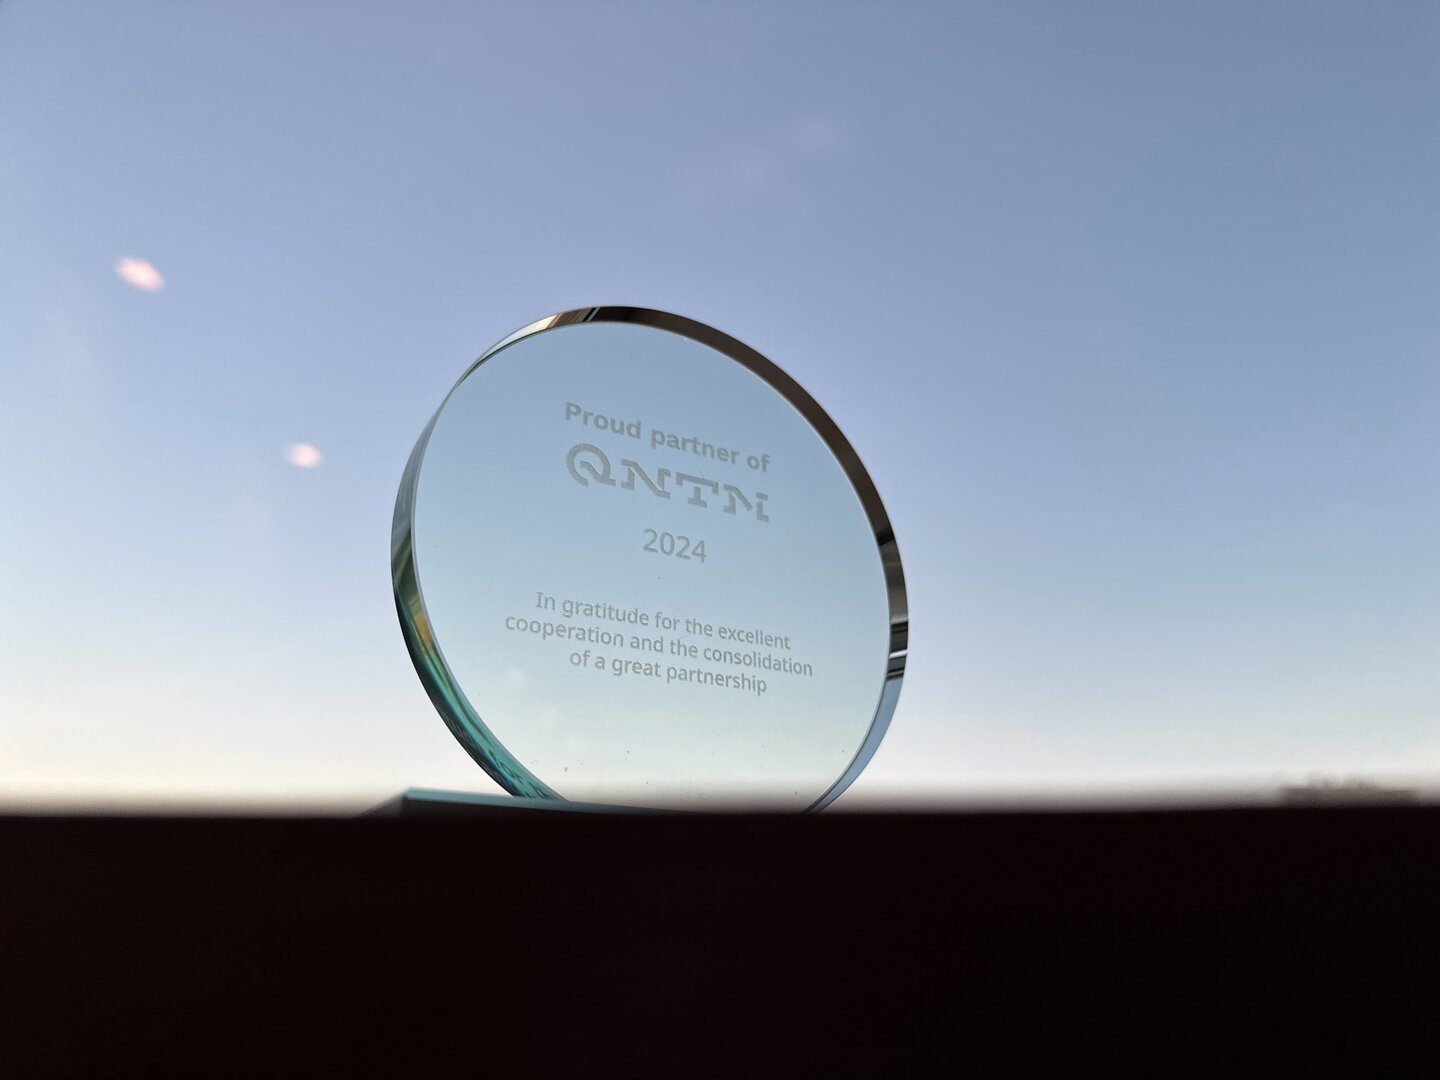 Foto: Pokal "Proud partner of QNTM 2024" für atlantis dx